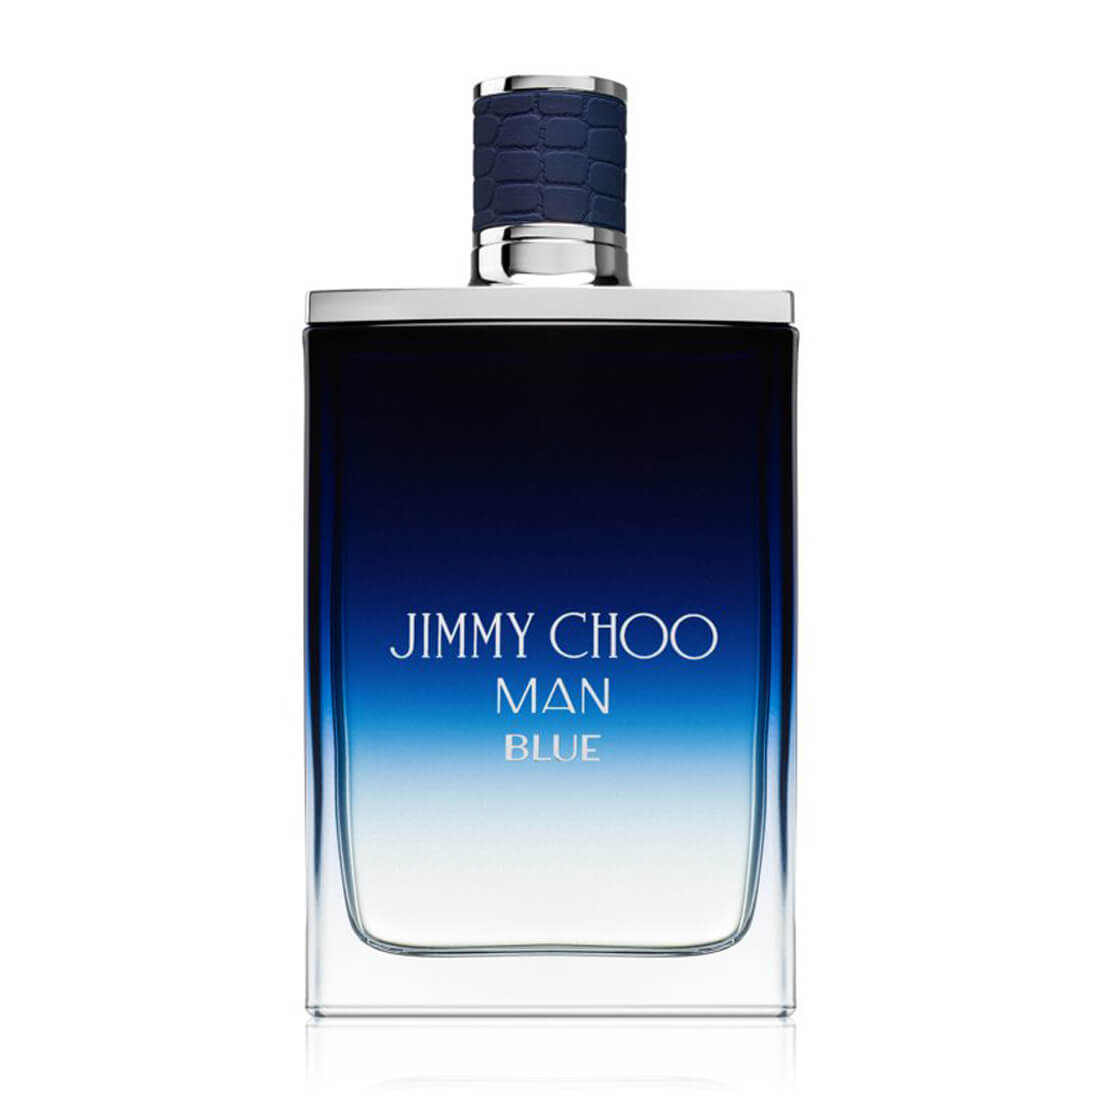 Jimmy Choo Man Blue Eau de Toilette 4-Piece Gift Set